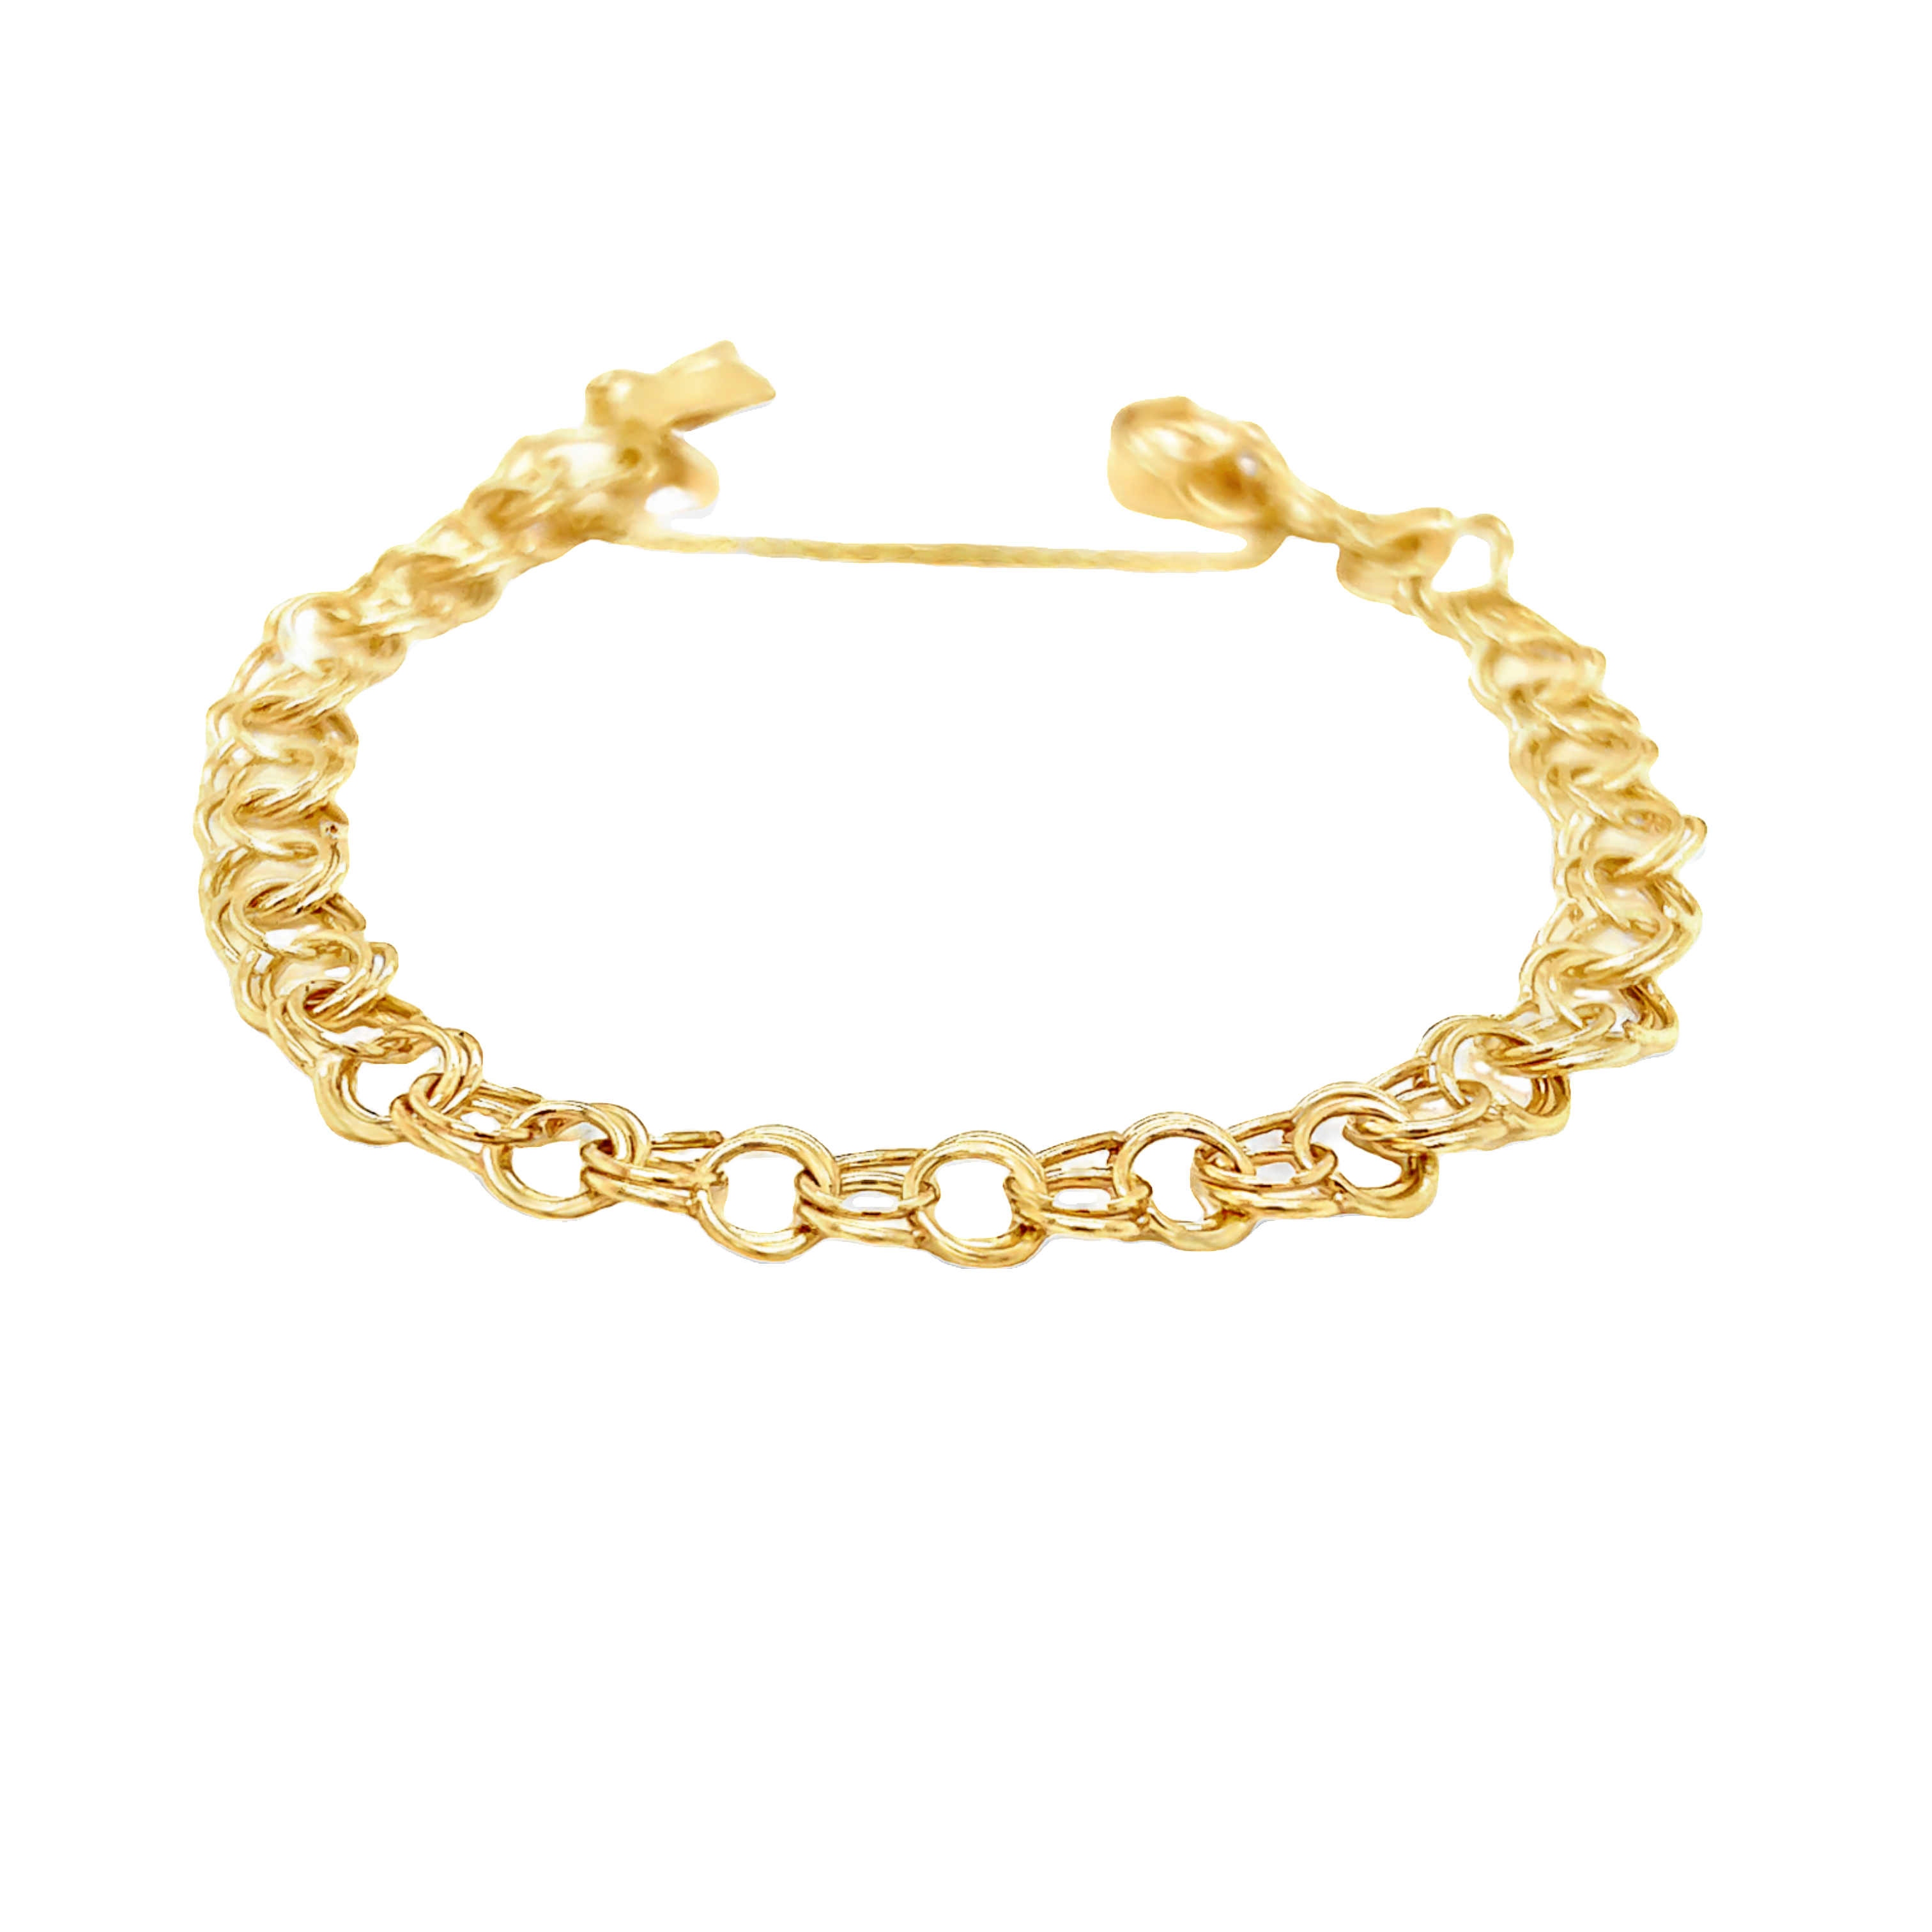 10 Karat Yellow Gold Cable Link Charm Bracelet 7"